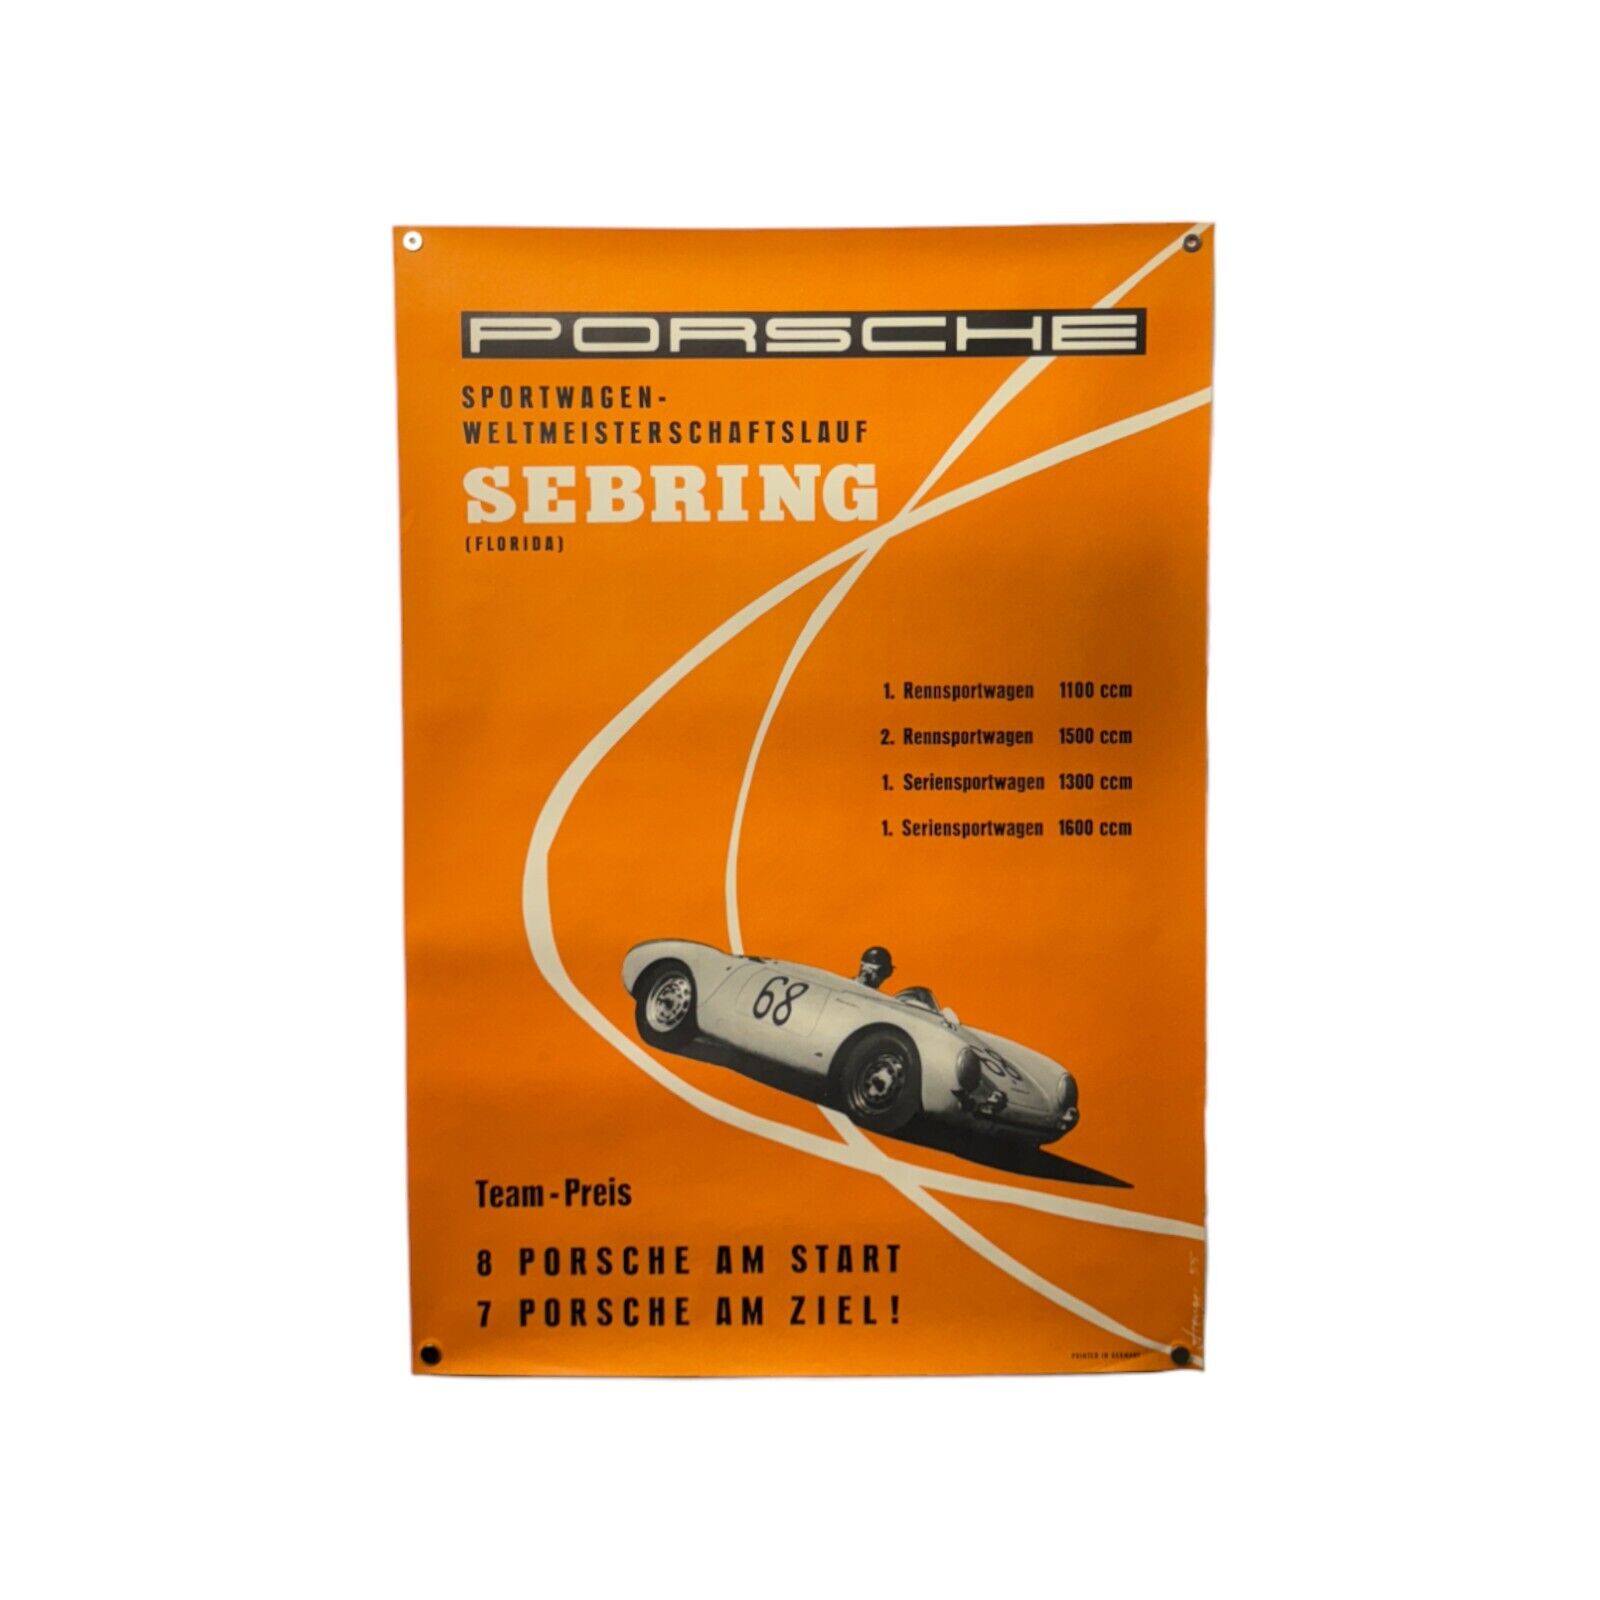 *ORIGINAL*  1955 Factory Porsche 550 Racing Sebring Poster. VINTAGE